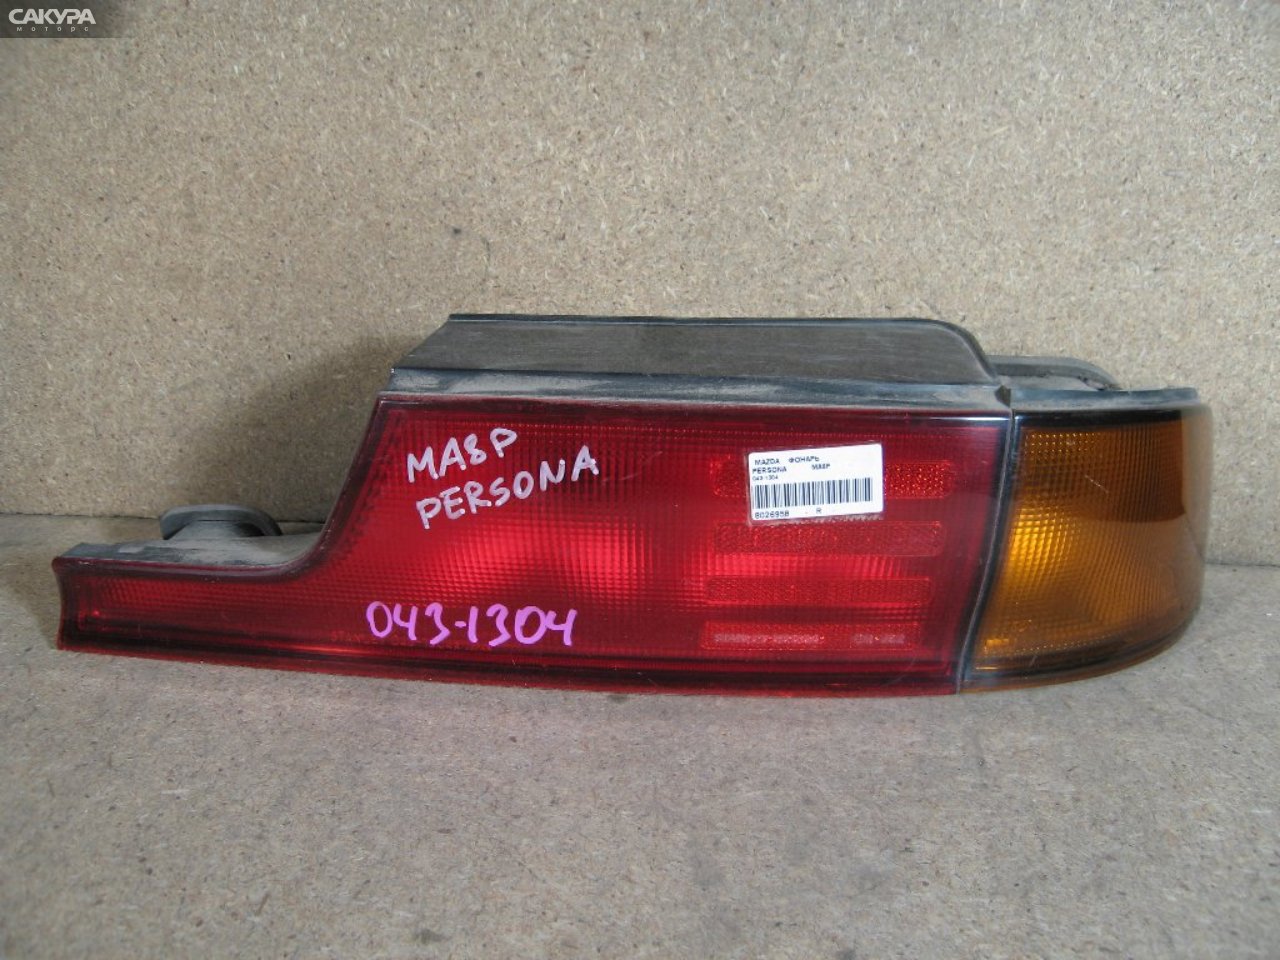 Фонарь стоп-сигнала правый Mazda Persona MA8P 043-1304: купить в Сакура Абакан.